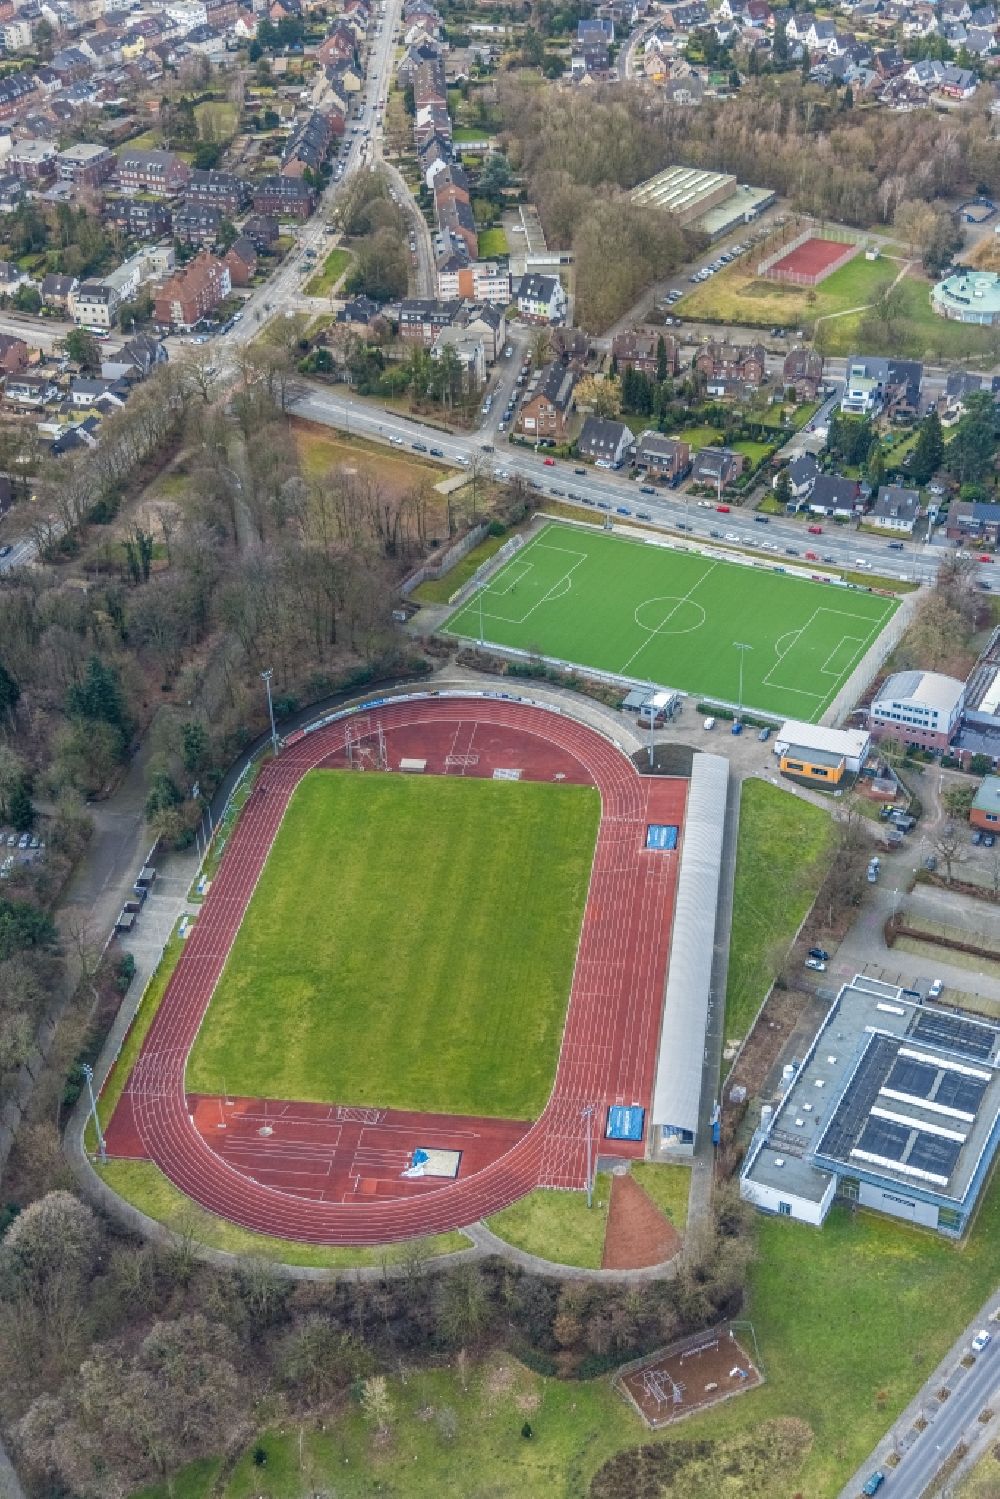 Aerial image Bottrop - Football stadium Jahnstadion of the football club Schalke 04 ad Dieter-Renz-Hall in Bottrop at Ruhrgebiet in the state North Rhine-Westphalia